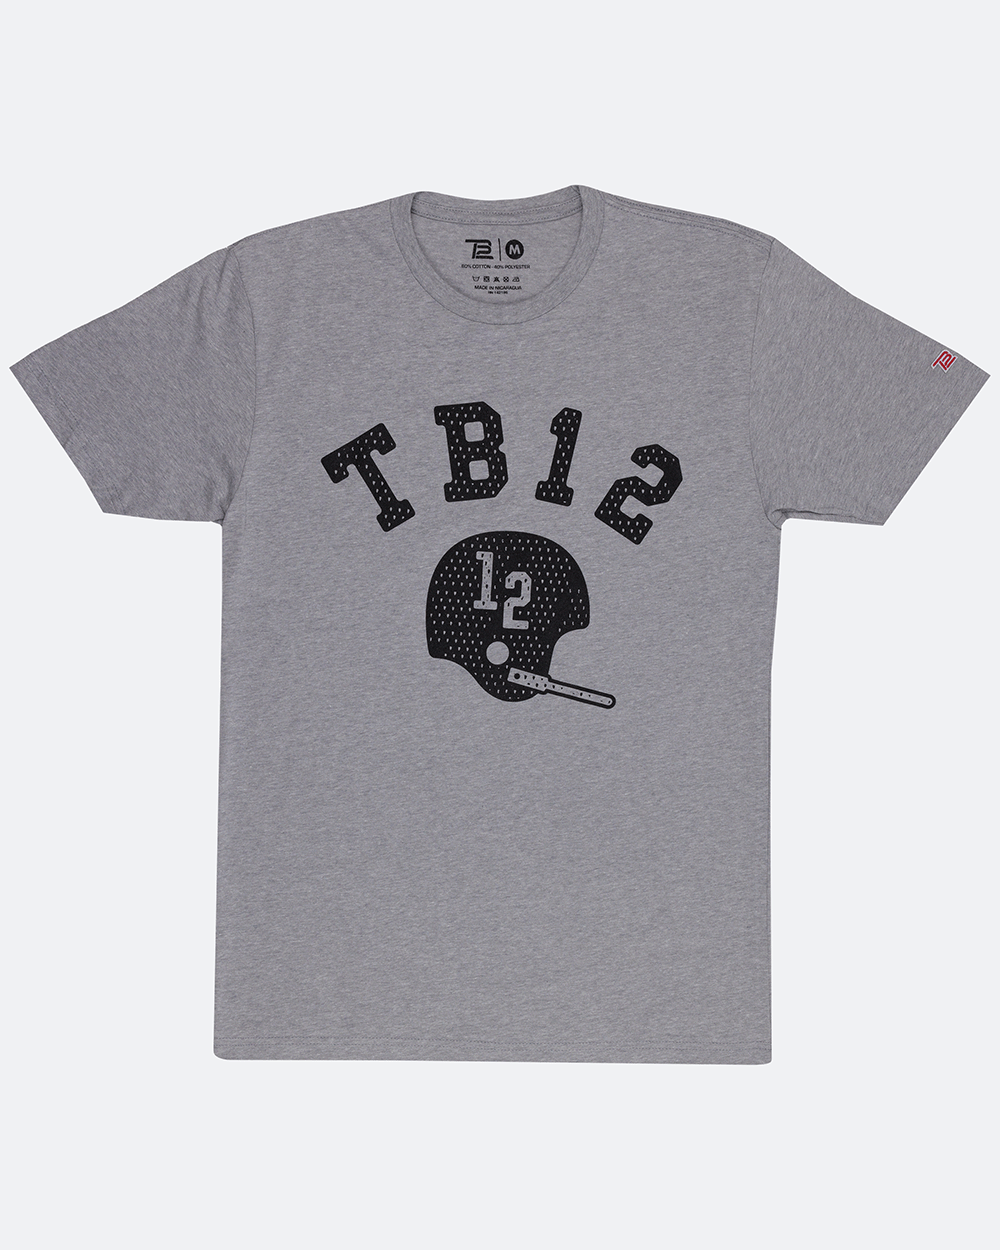 tb12 apparel